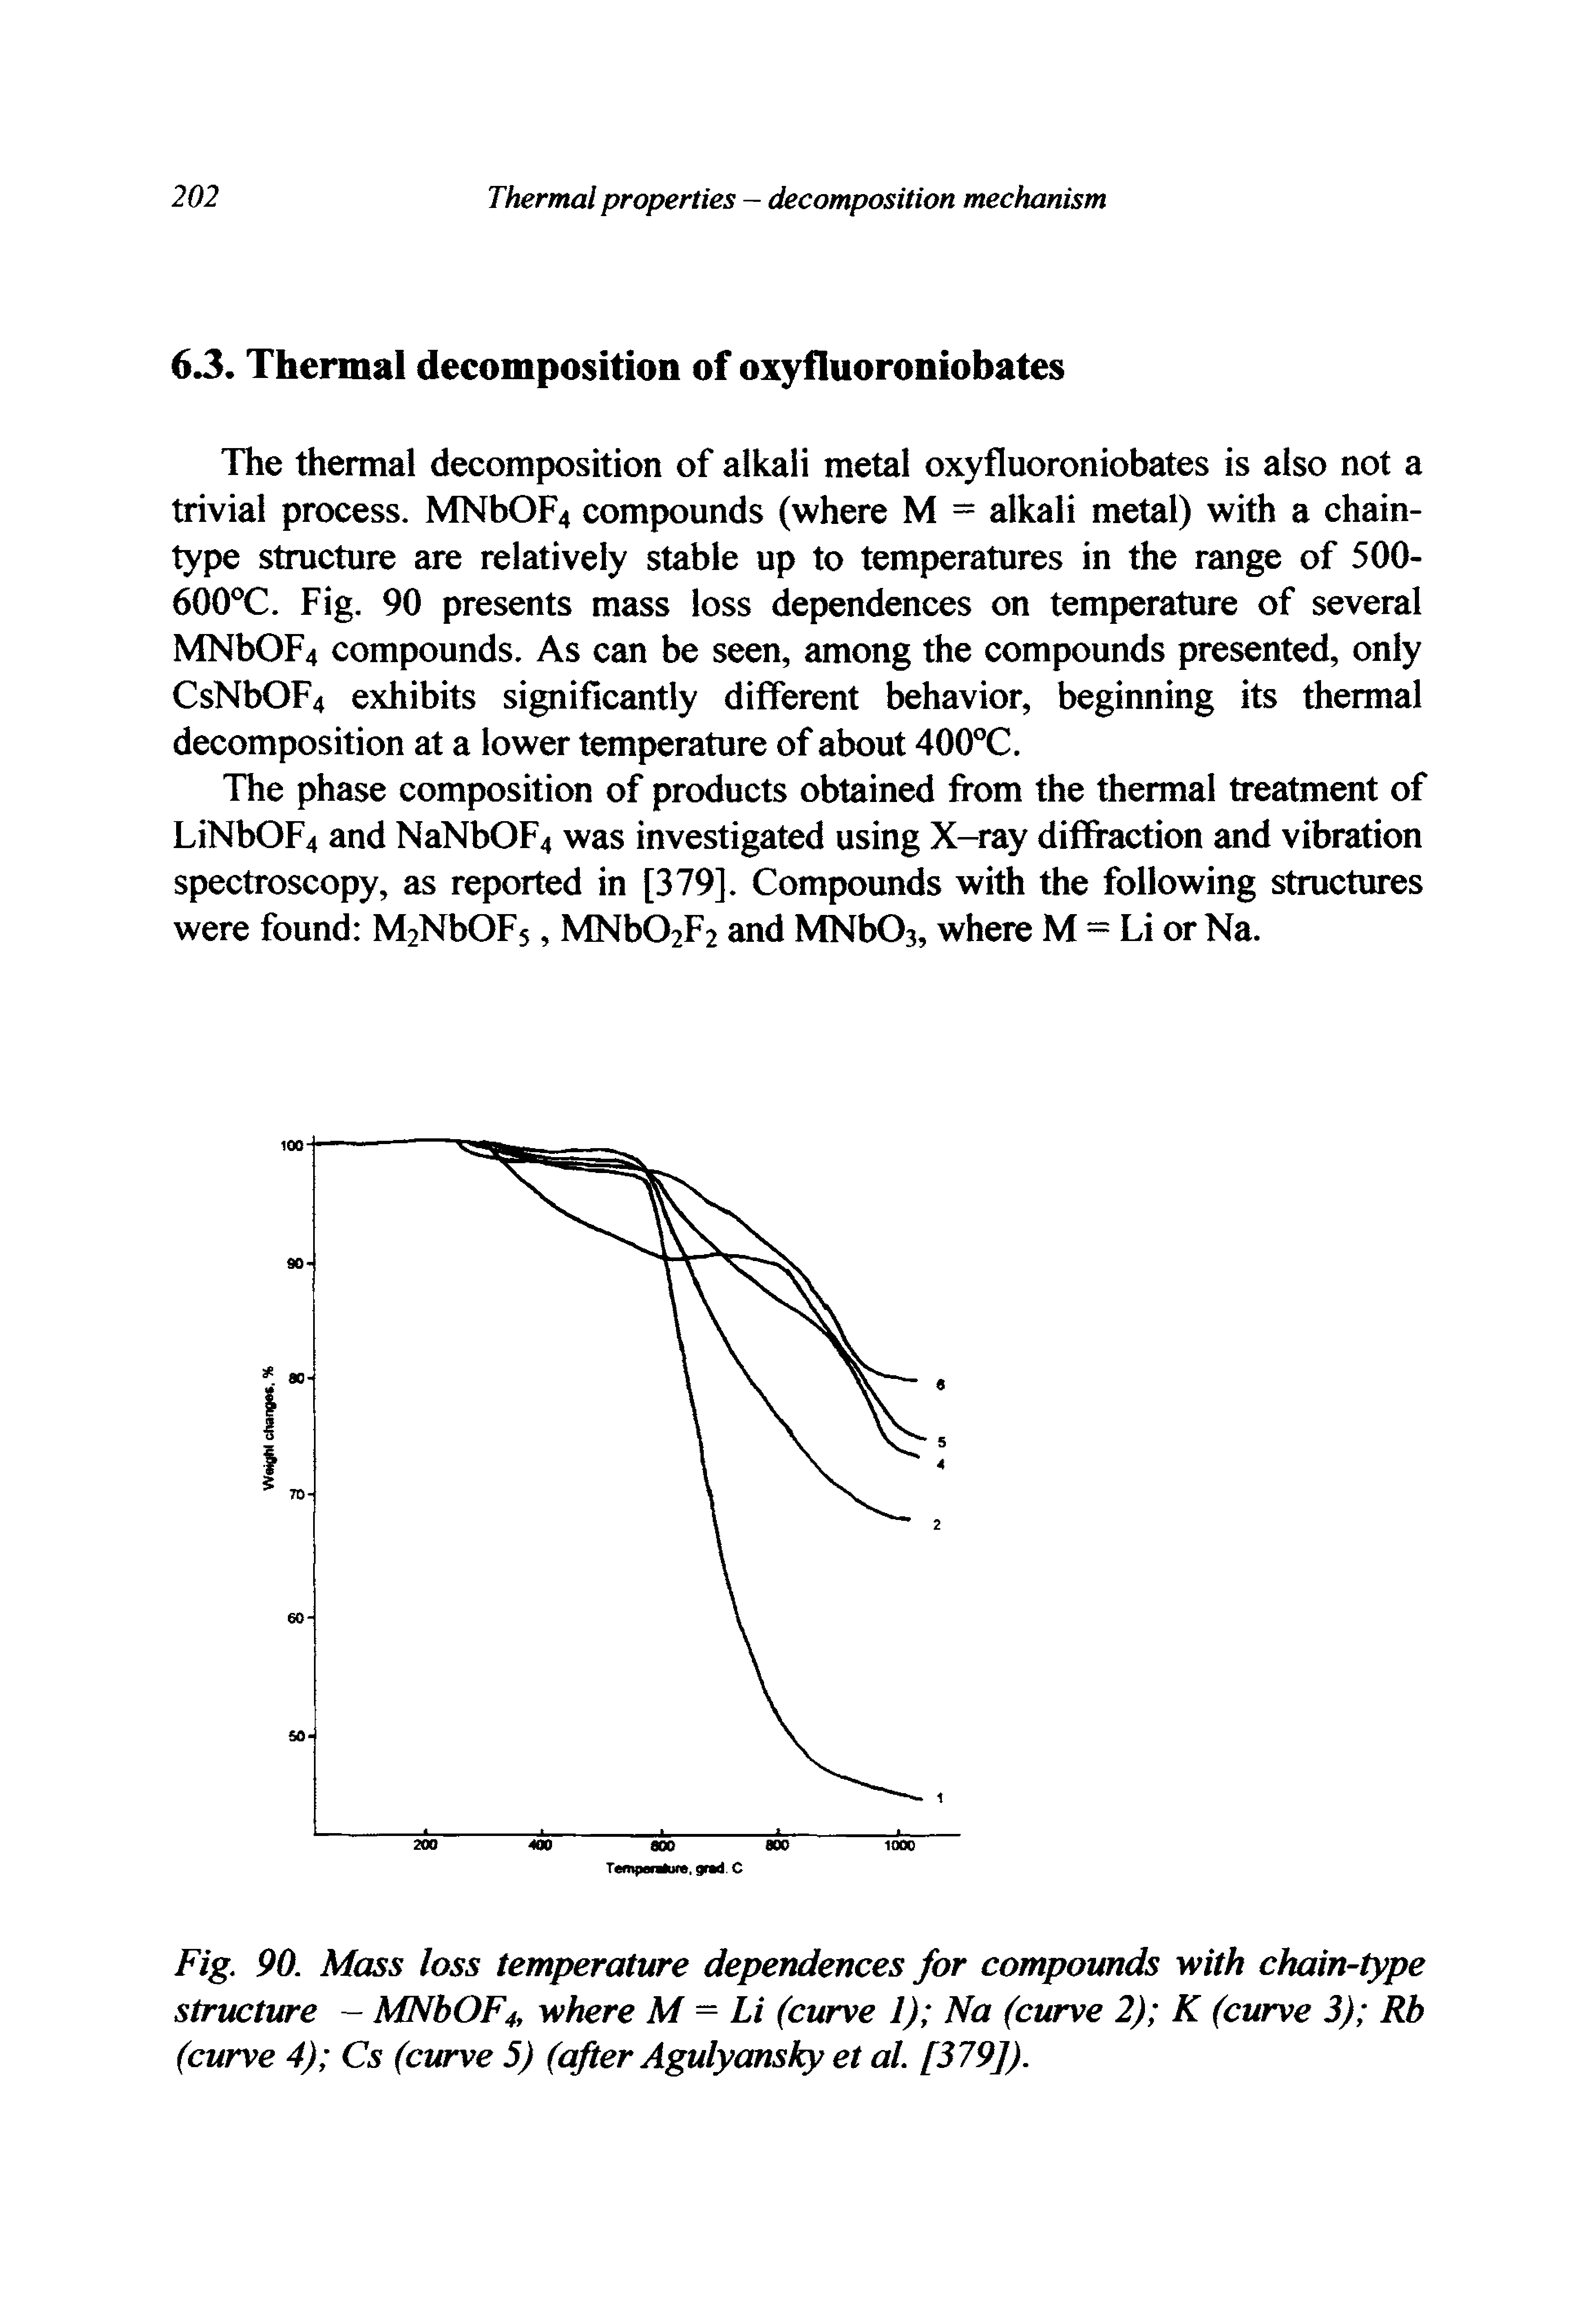 Fig. 90. Mass loss temperature dependences for compounds with chain-type structure - MNbOF4, where M — Li (curve 1) Na (curve 2) K (curve 3) Rb (curve 4) Cs (curve 5) (after Agulyansky et al. [379]).